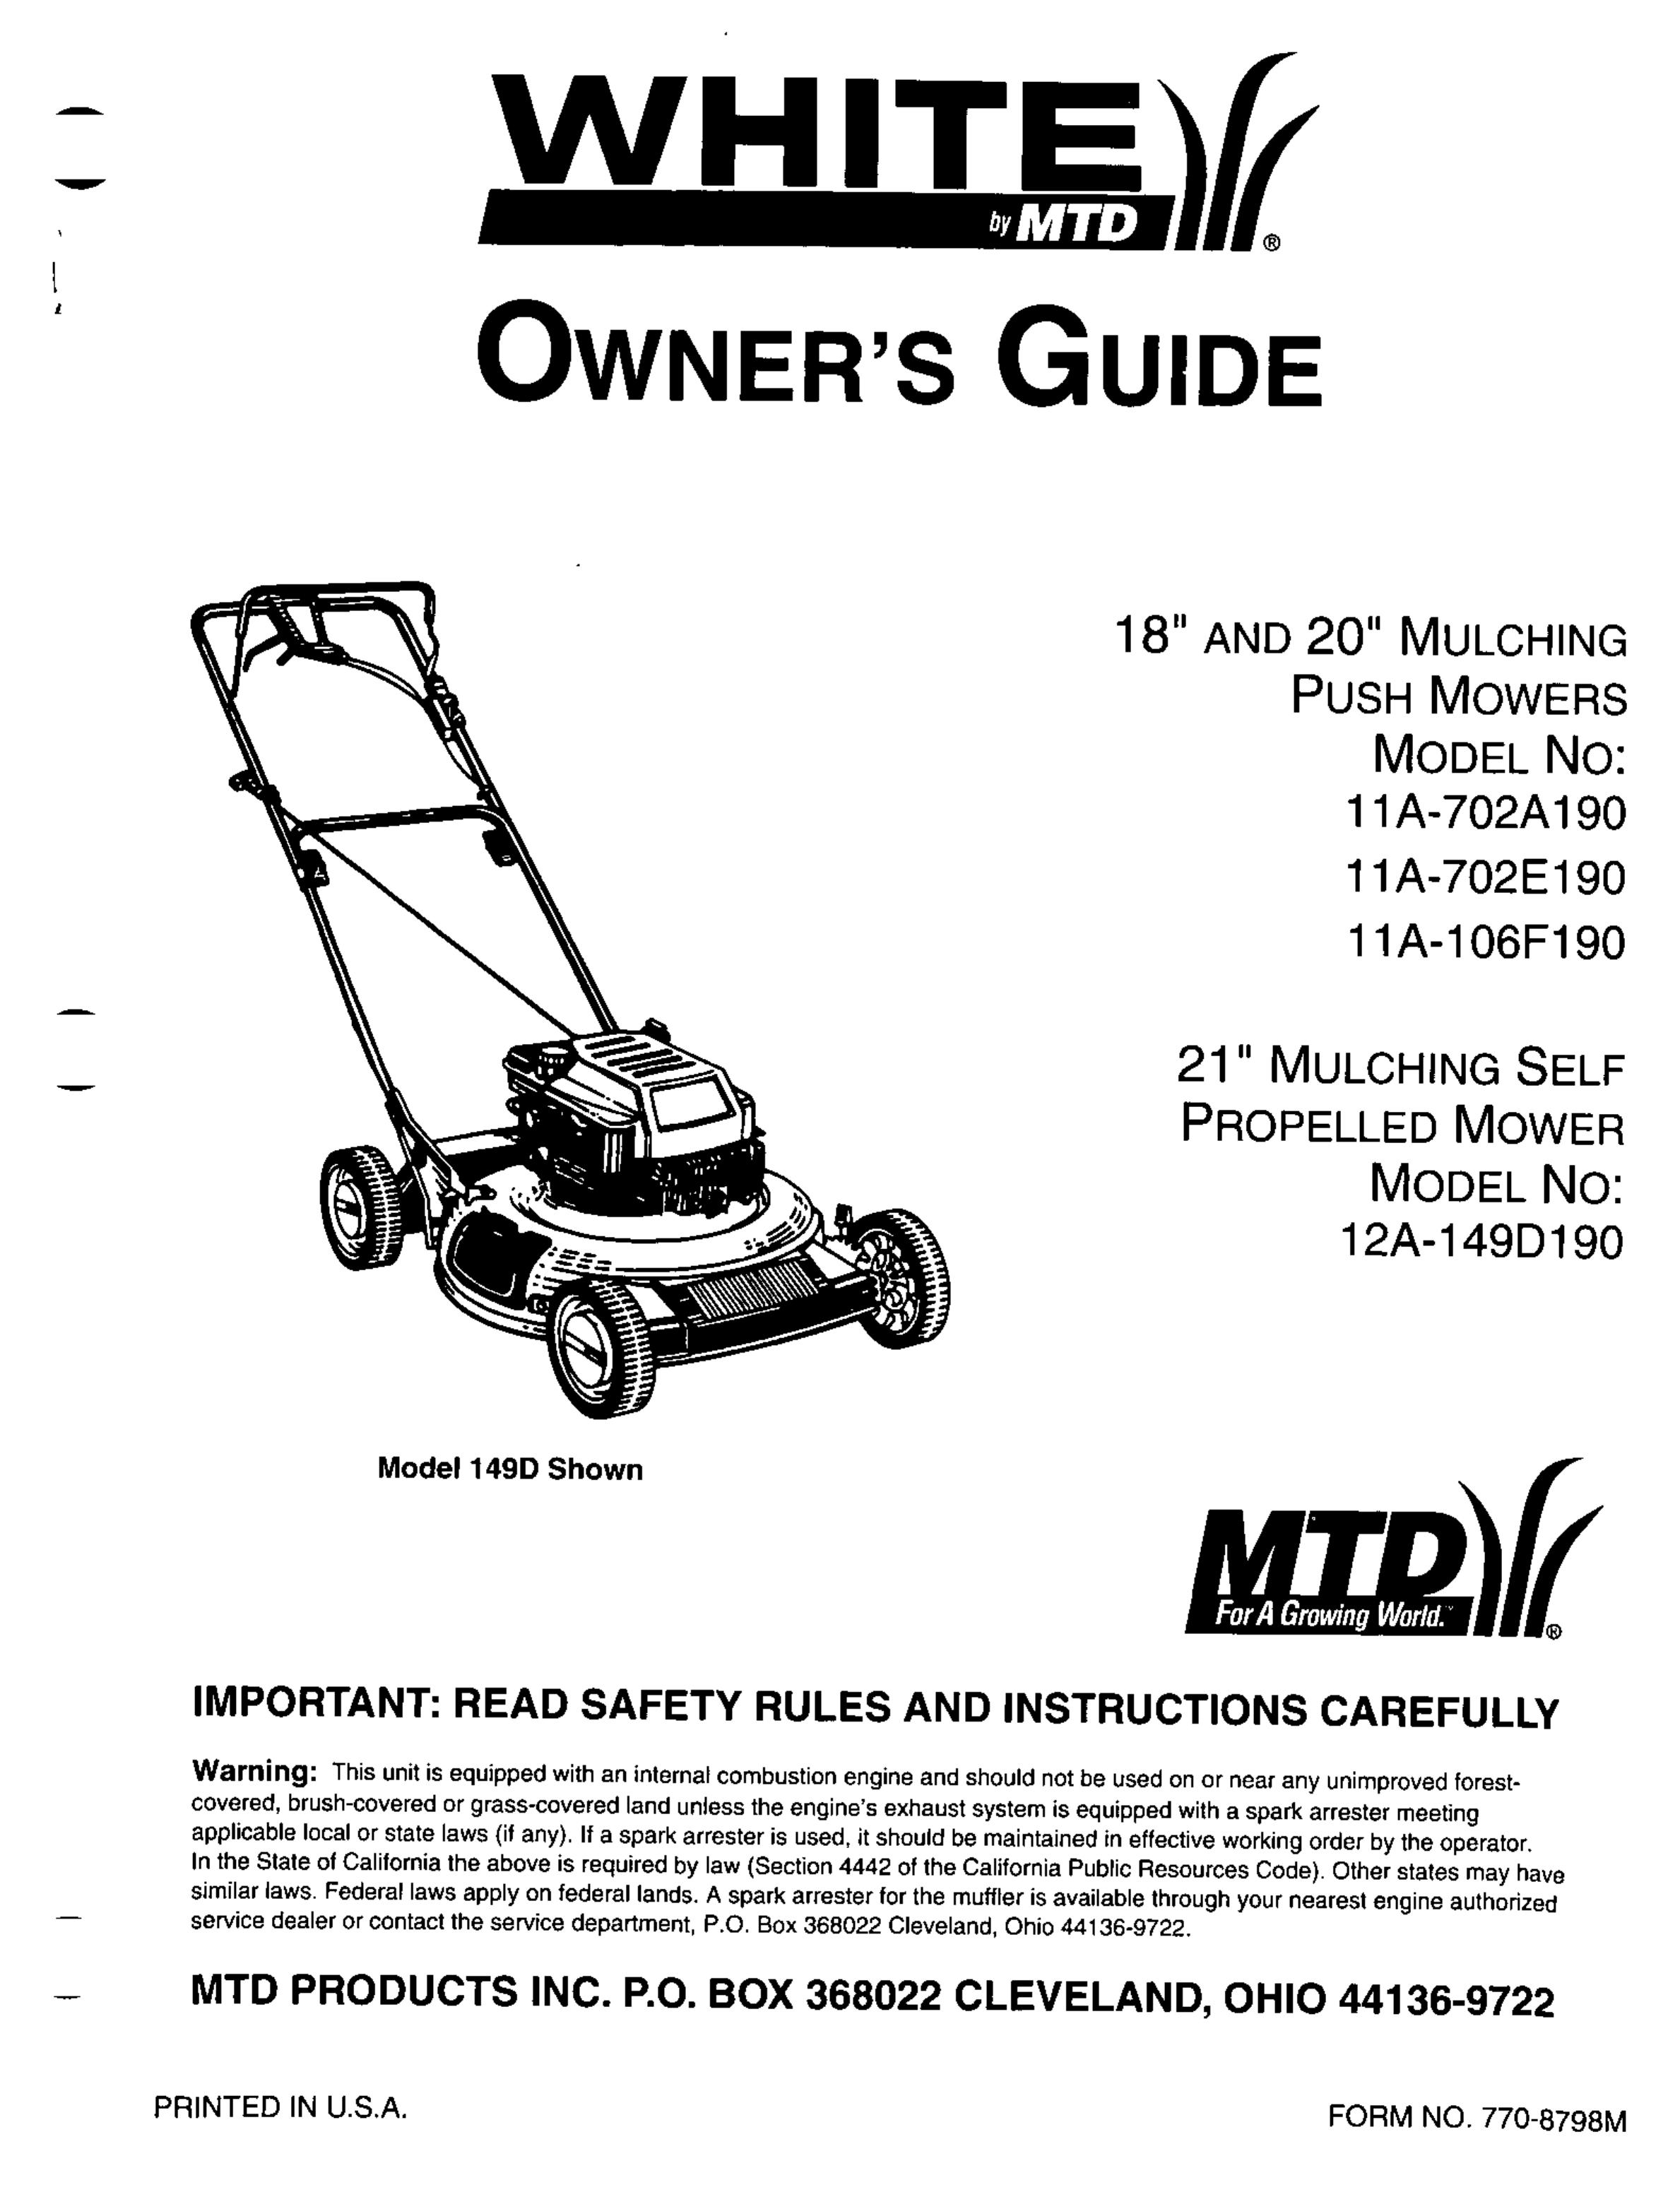 White 11A-106F190 Lawn Mower User Manual